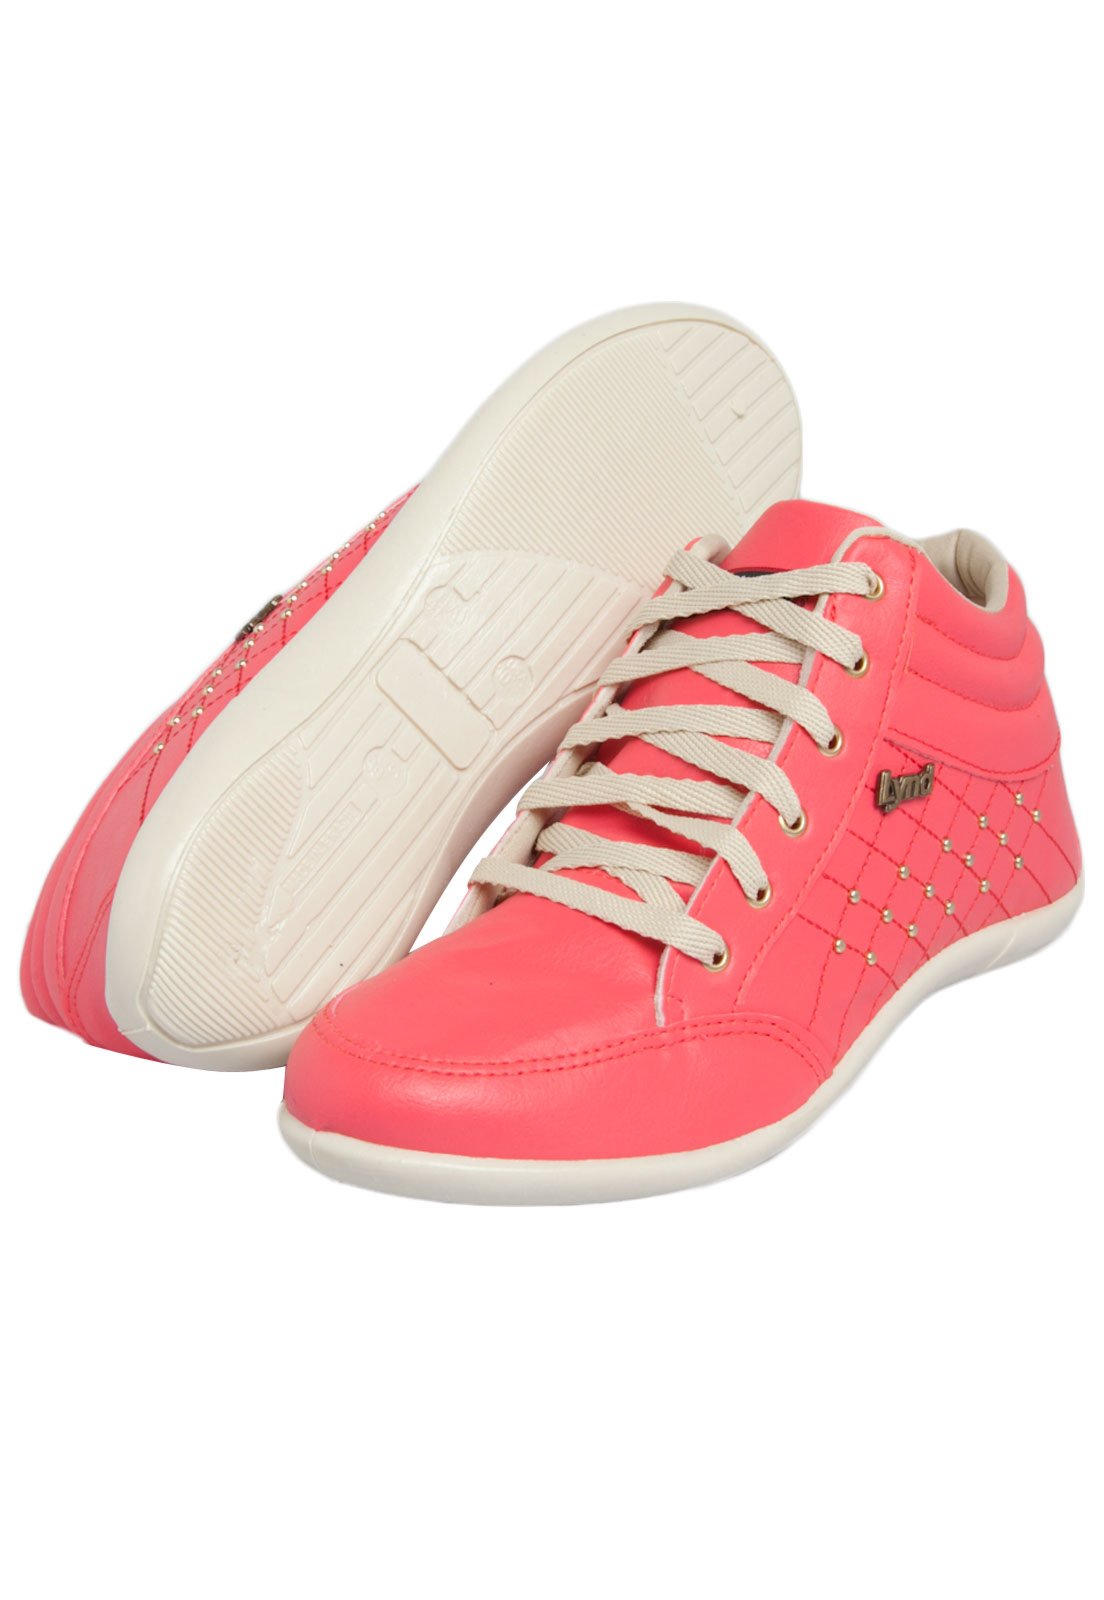 tenis lynd feminino rosa